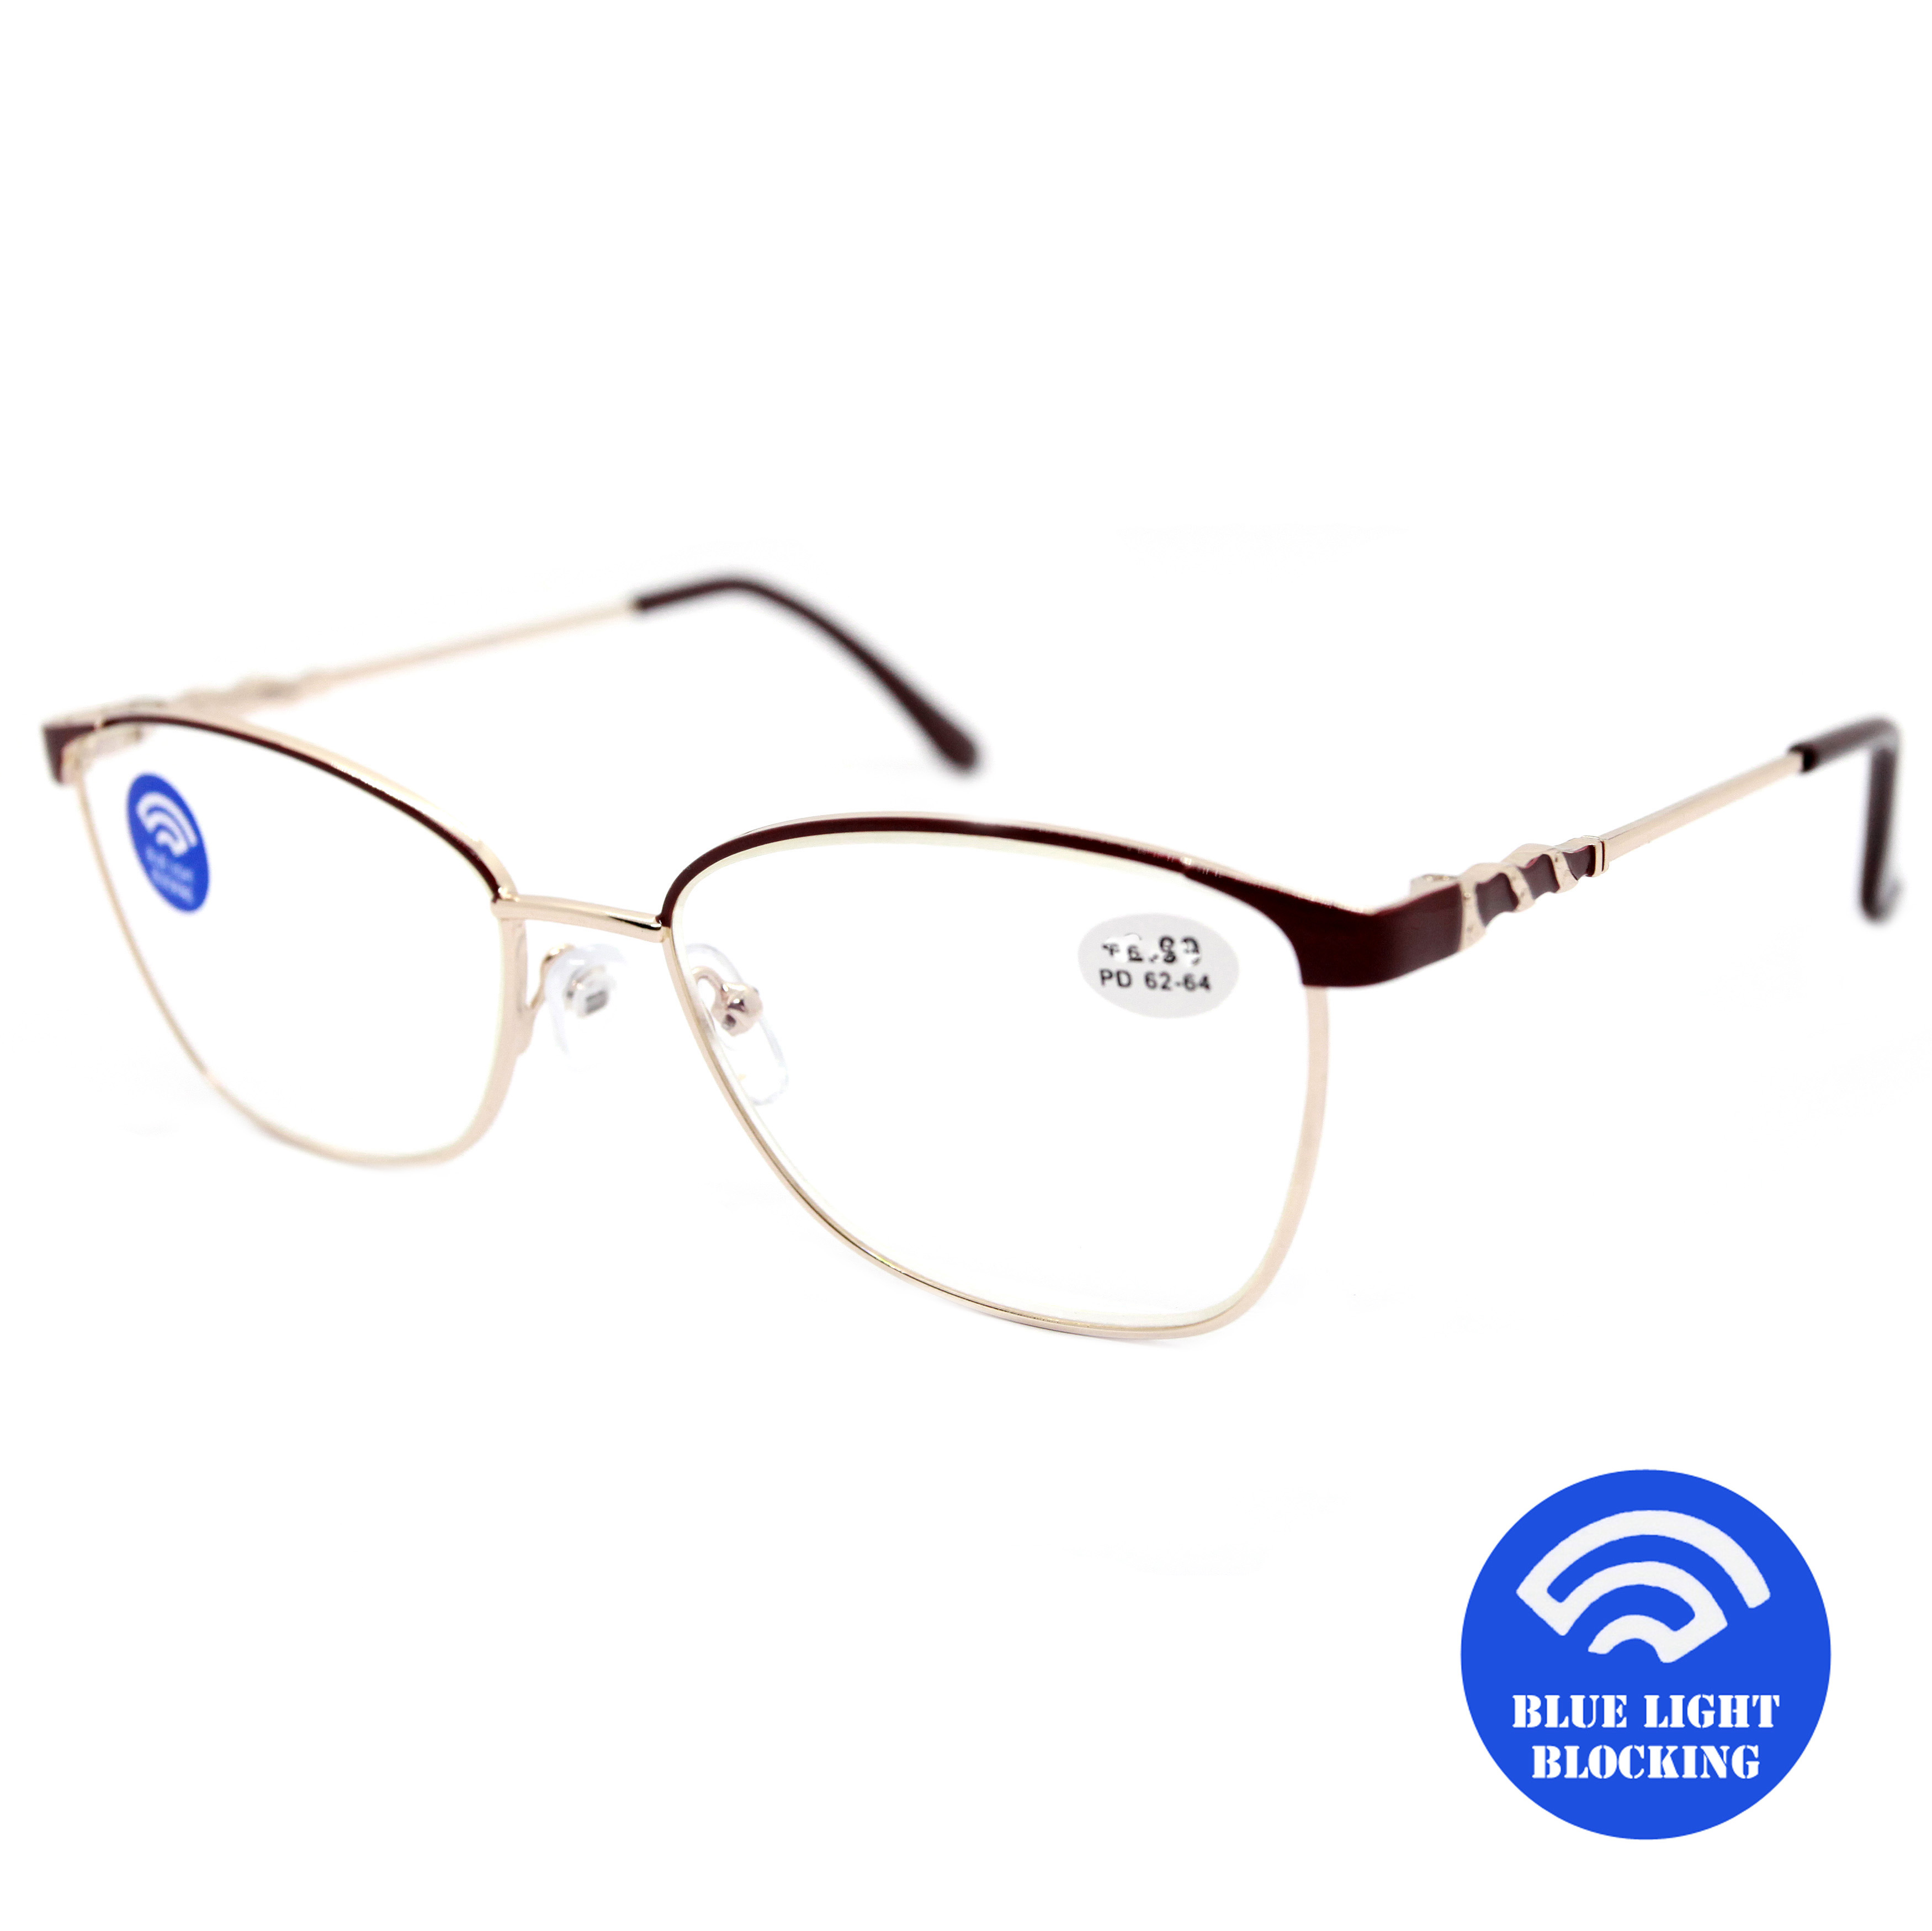 Готовые очки Glodiatr 1731 +3,25, без футляра, BLUE BLOCKER, бордовый, РЦ 62-64